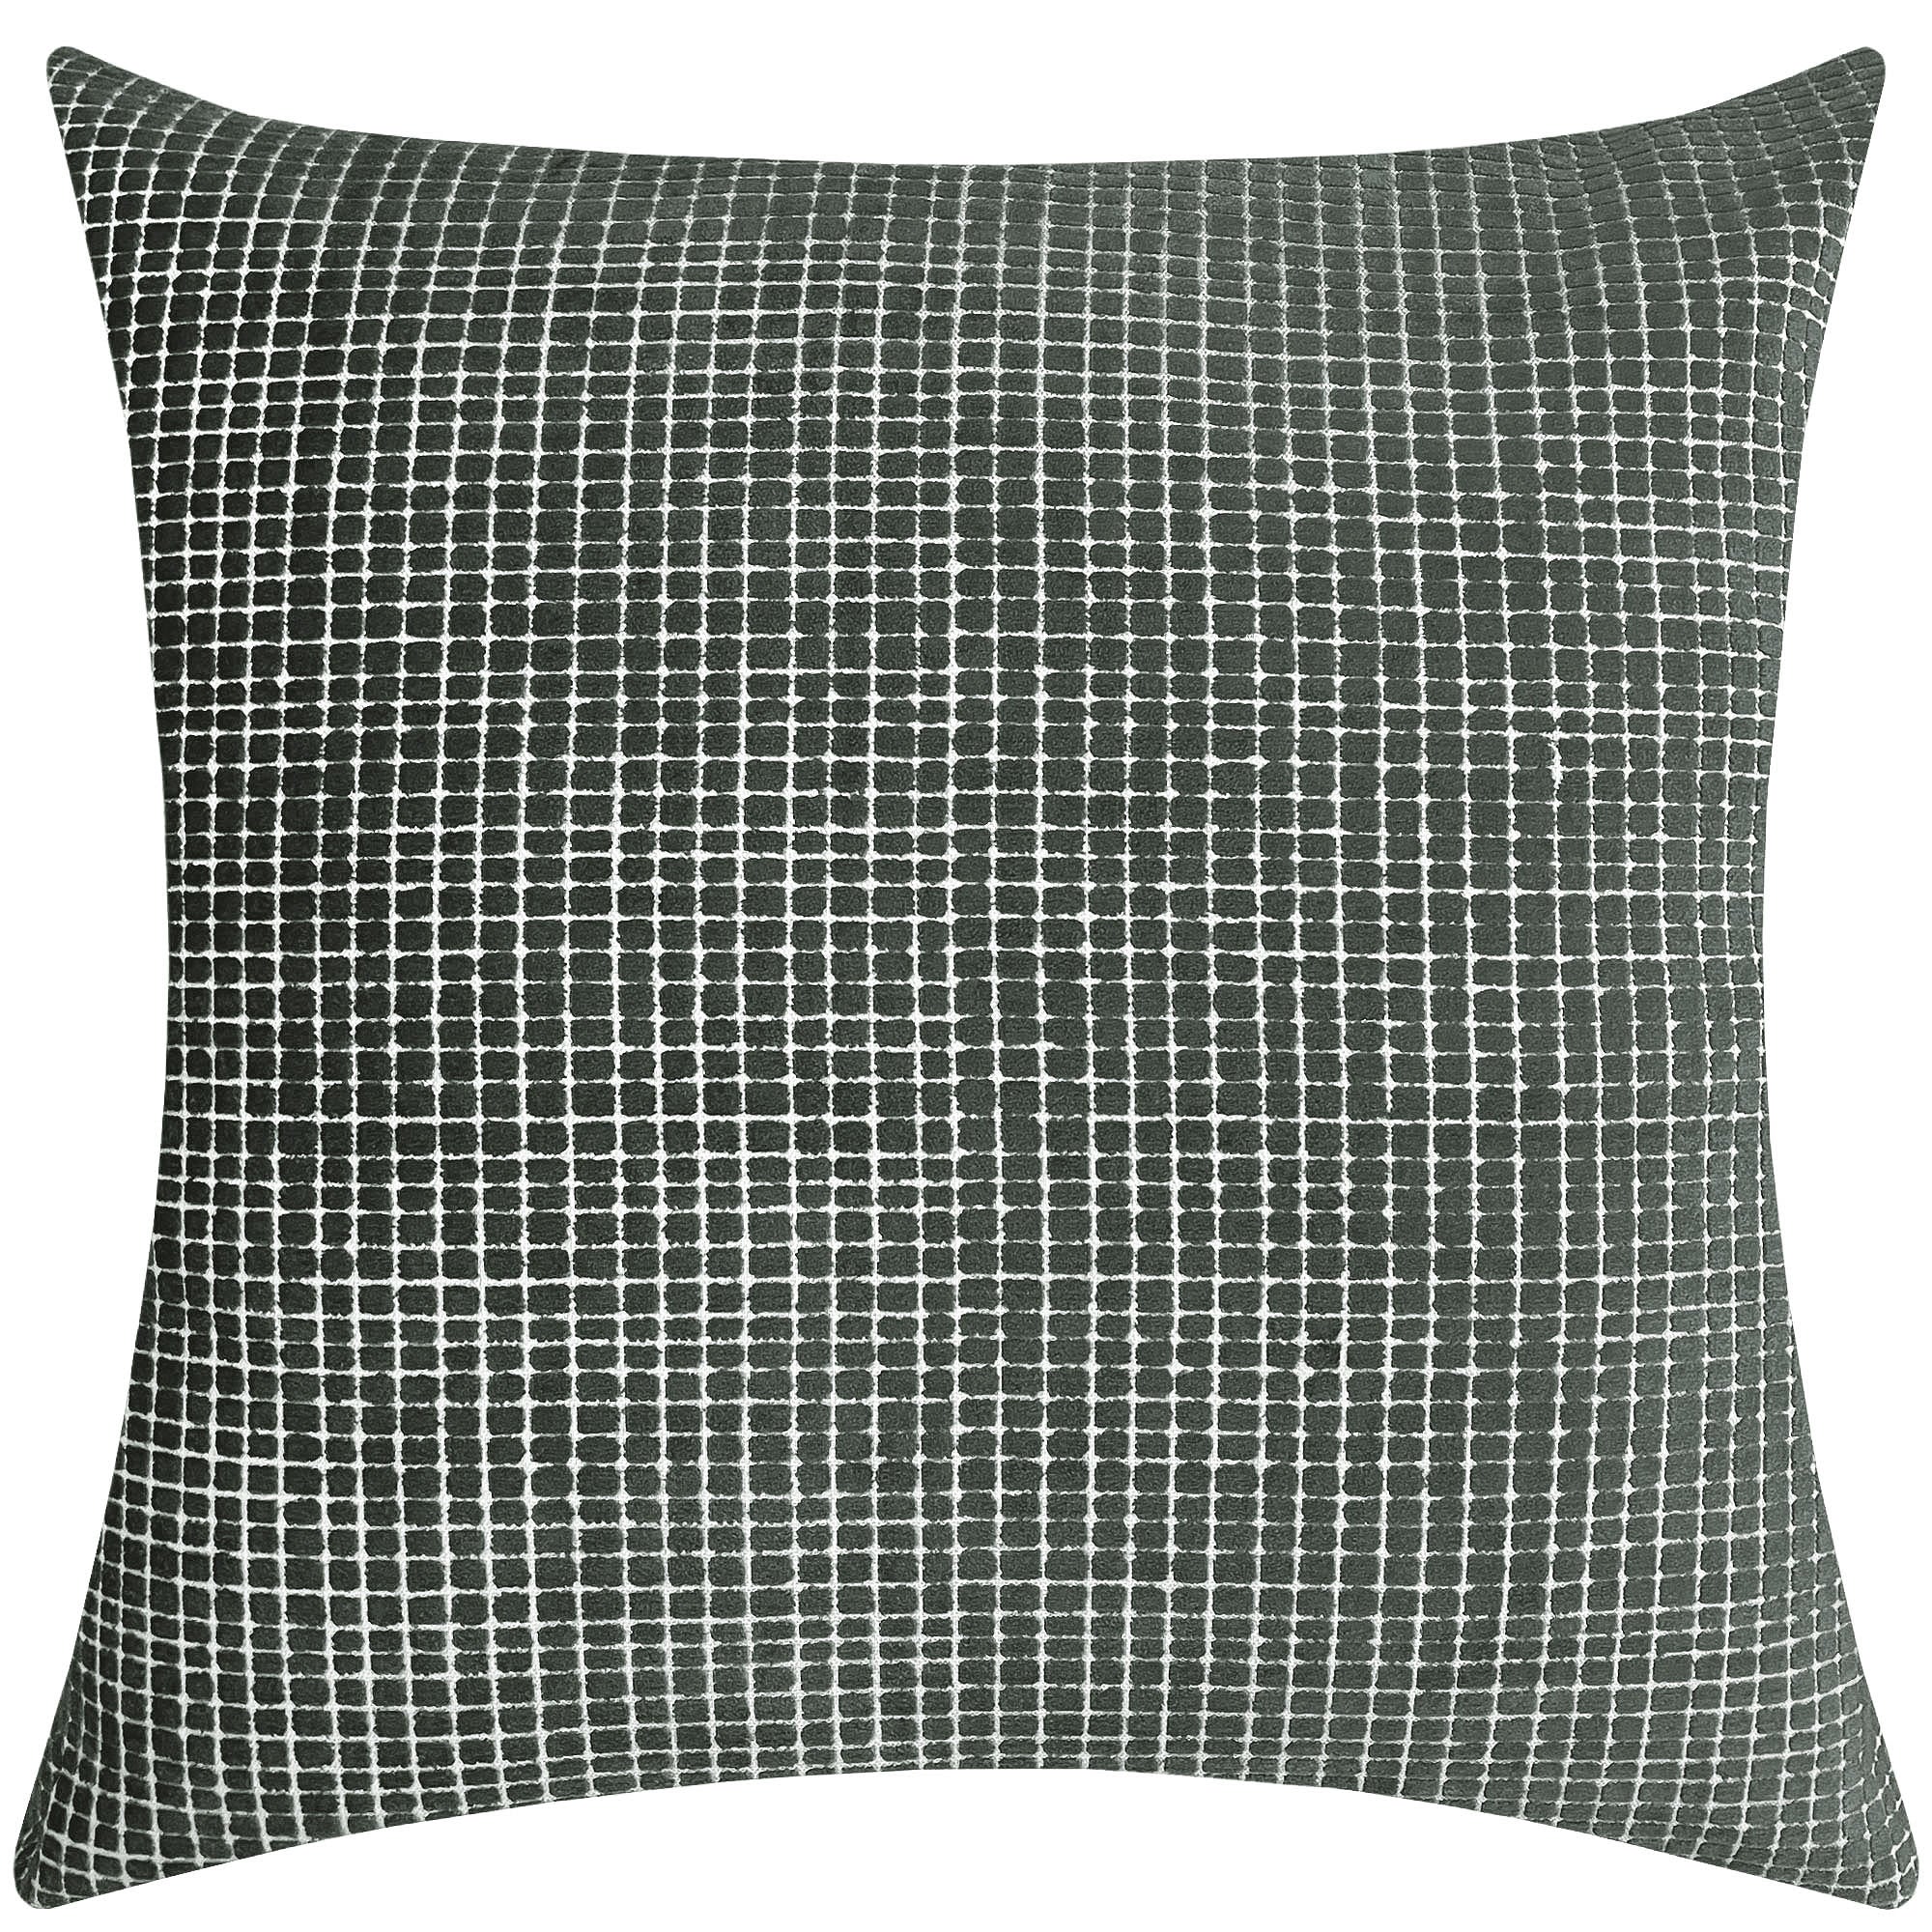 Vika Pillows | Size 23X23